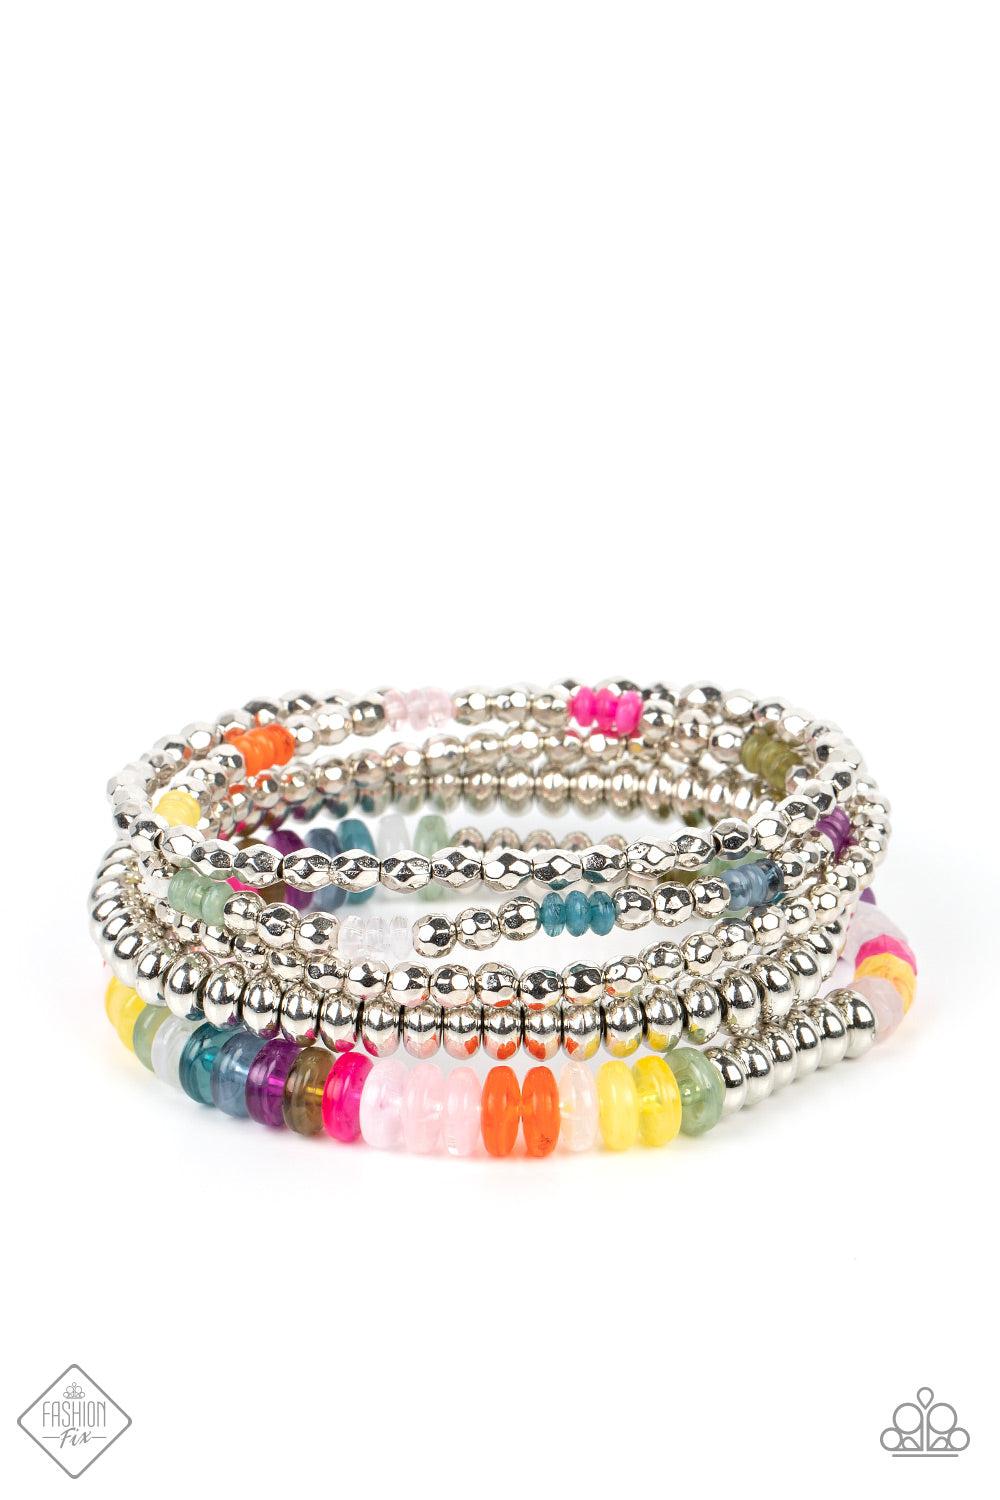 Pristine Pixie Dust Multi Bracelet - Paparazzi Accessories- lightbox - CarasShop.com - $5 Jewelry by Cara Jewels